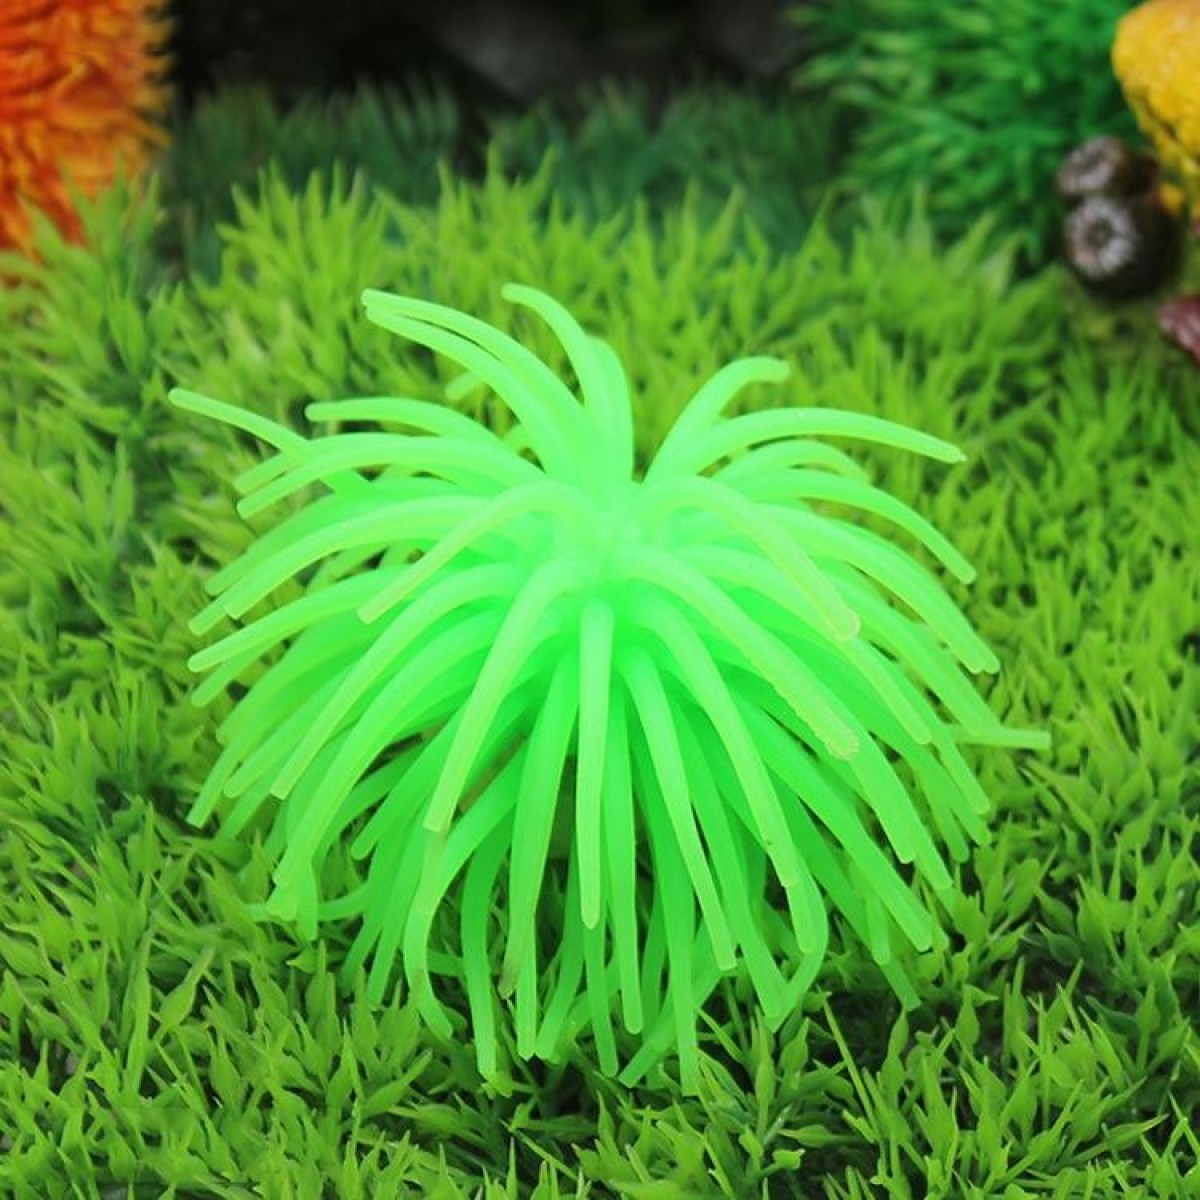 Aquarium Articles Decoration TPR Simulation Sea Urchin Ball Coral, Size: L, Diameter: 13cm(Green)